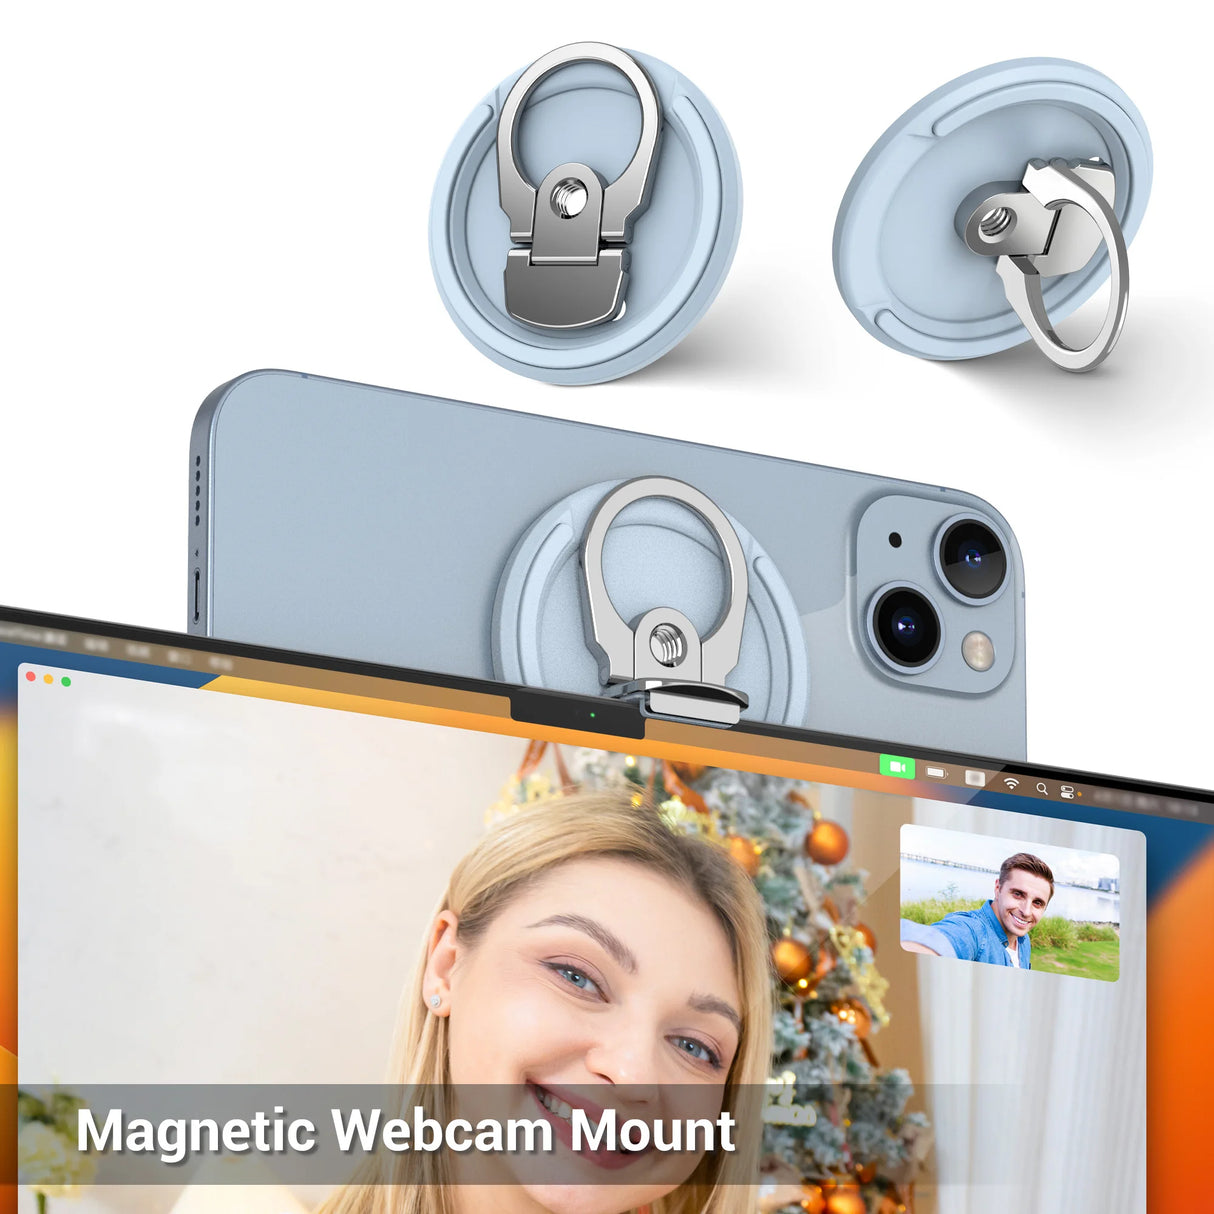 Apple iPhone & MacBook Magnetic Continuity Camera Mount